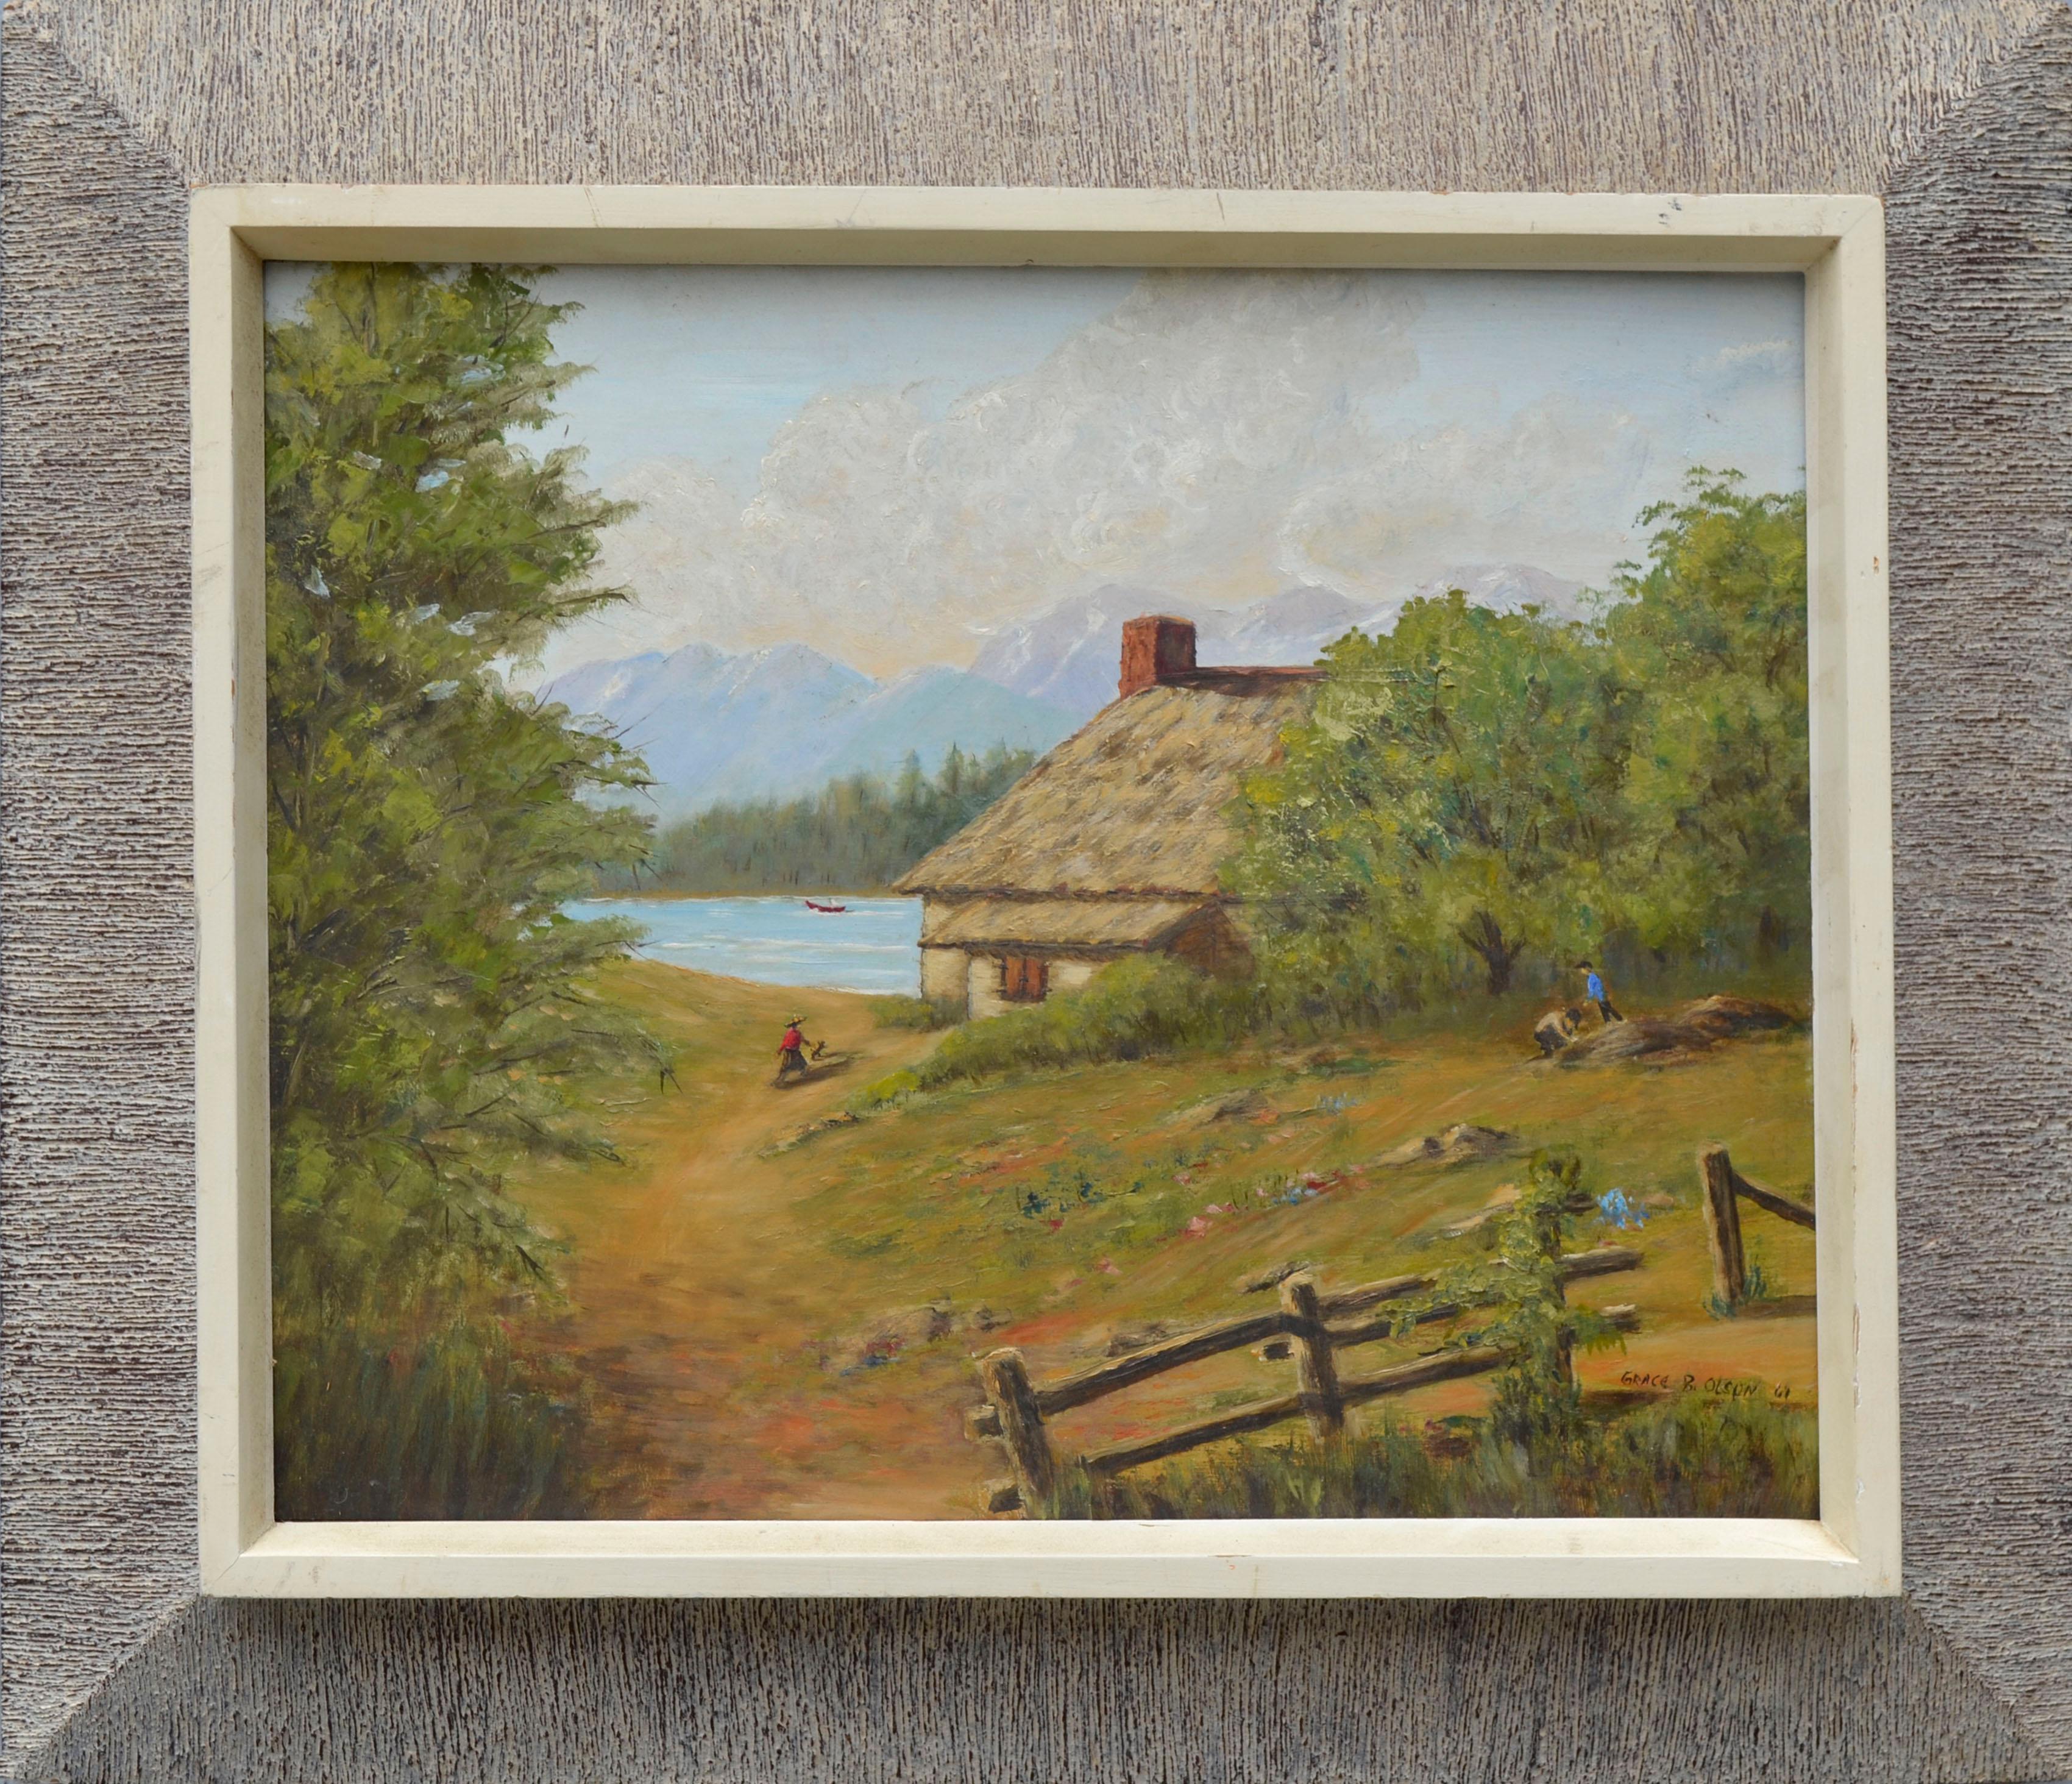 Grace B. Olson Figurative Painting - "Summer at the Lake" - Mid Century Figurative Landscape